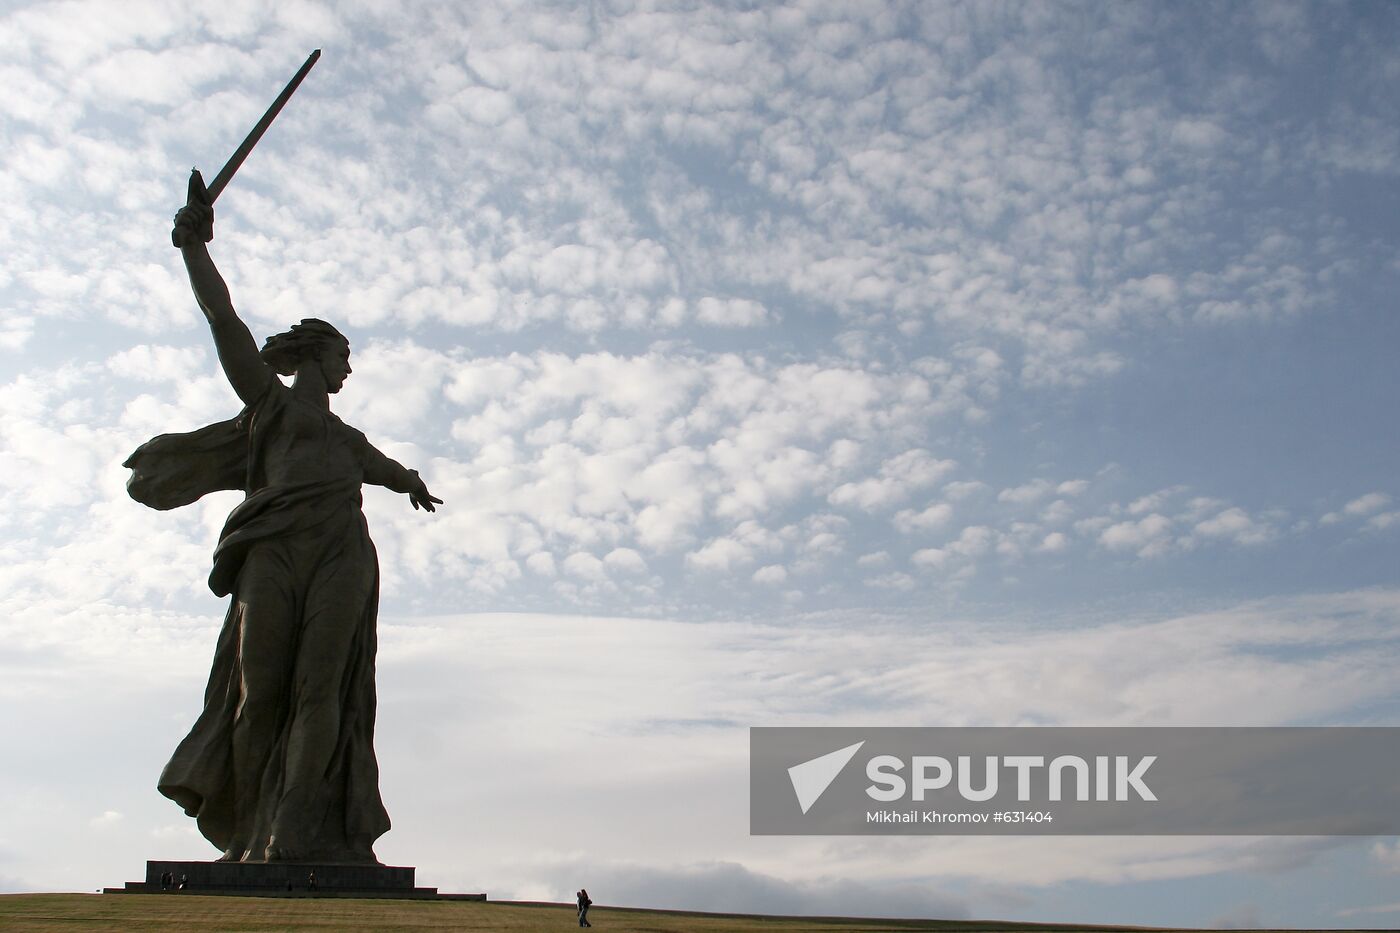 Monument "The Motherland Calls!" in Volgograd